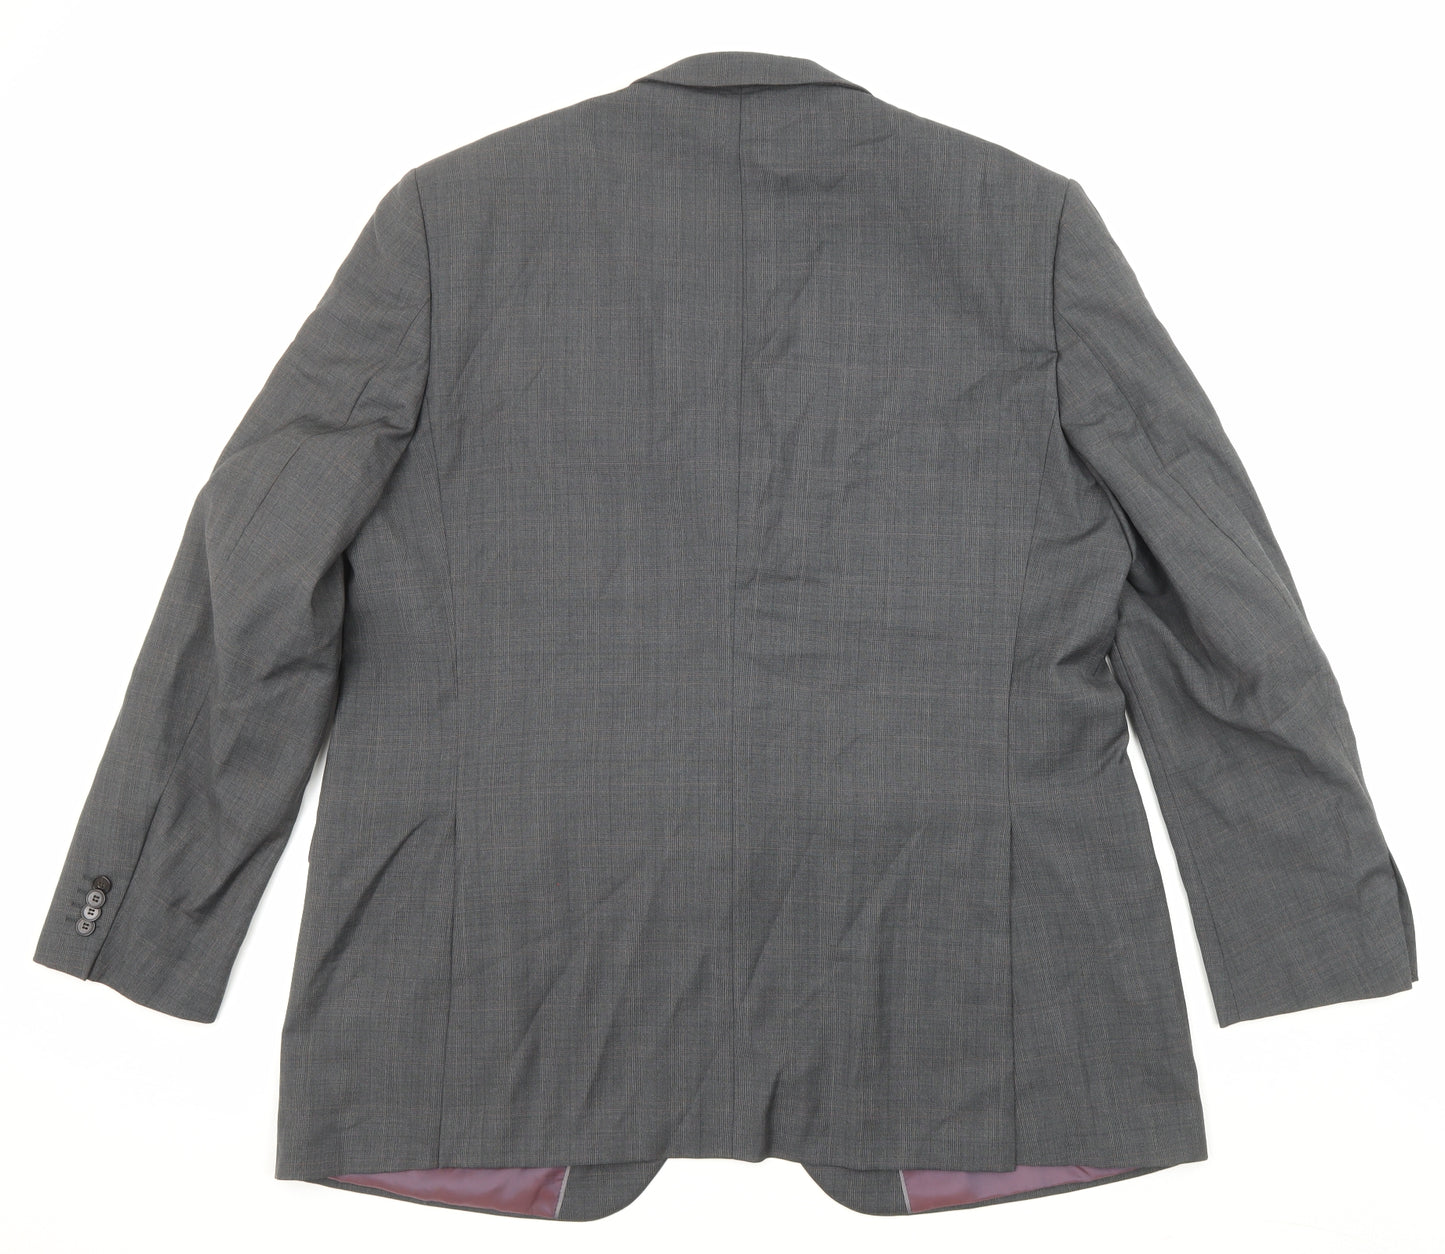 Marks and Spencer Mens Grey Plaid Wool Jacket Suit Jacket Size 48 Regular